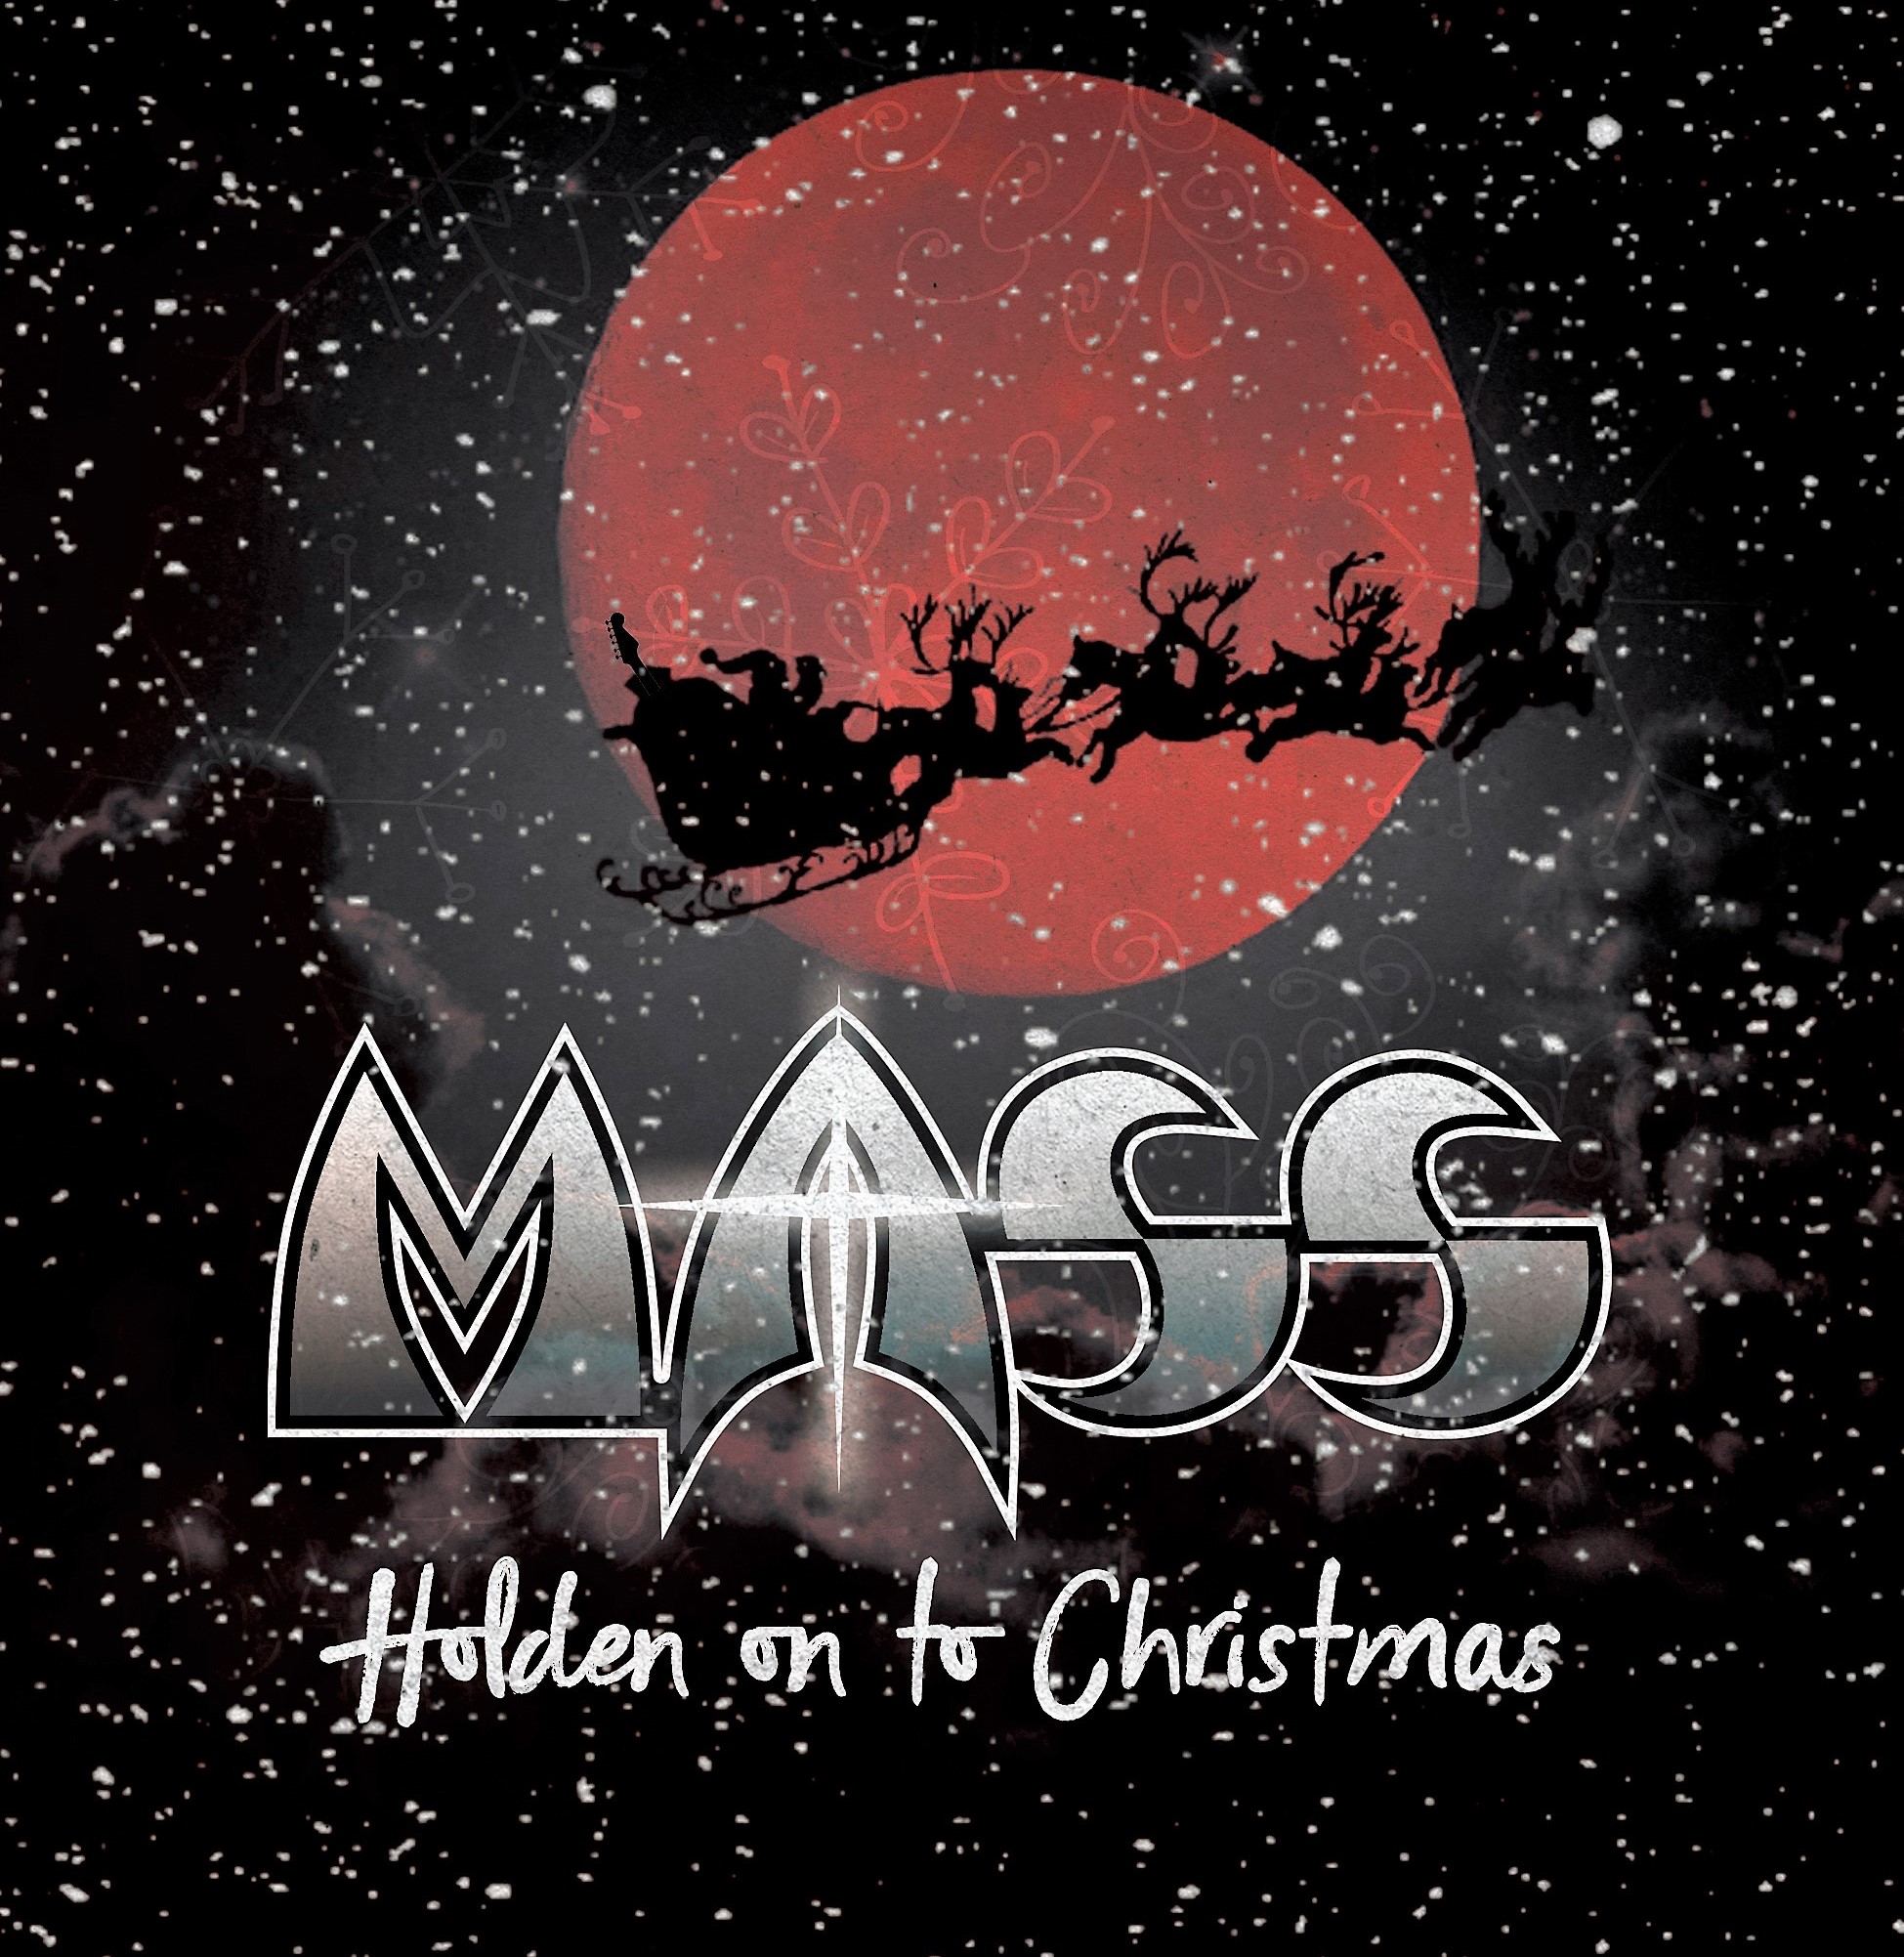 Mass - Holden on to christmas